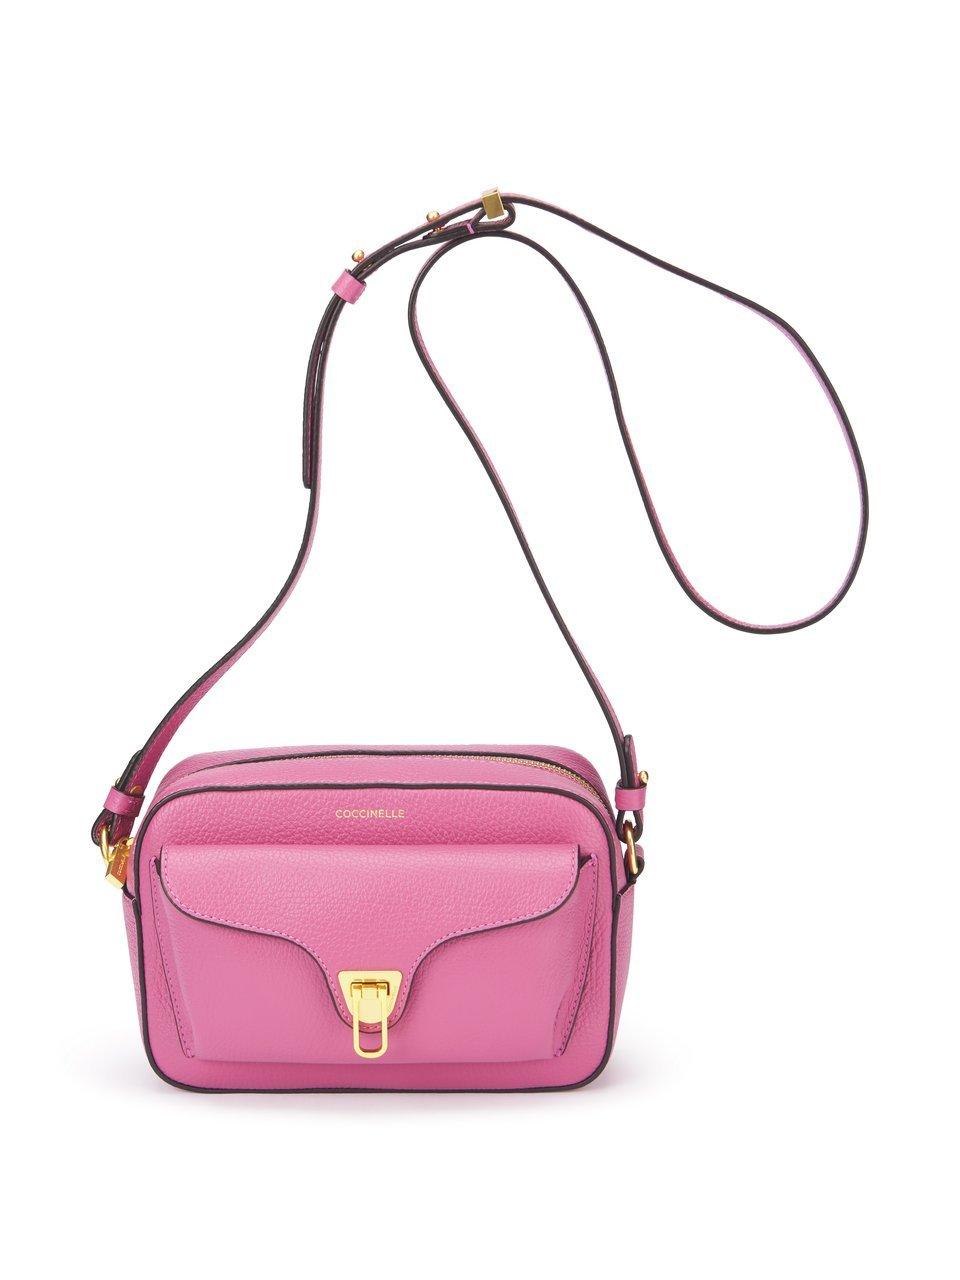 Image of Handbag “Beat Soft“ Coccinelle pale pink